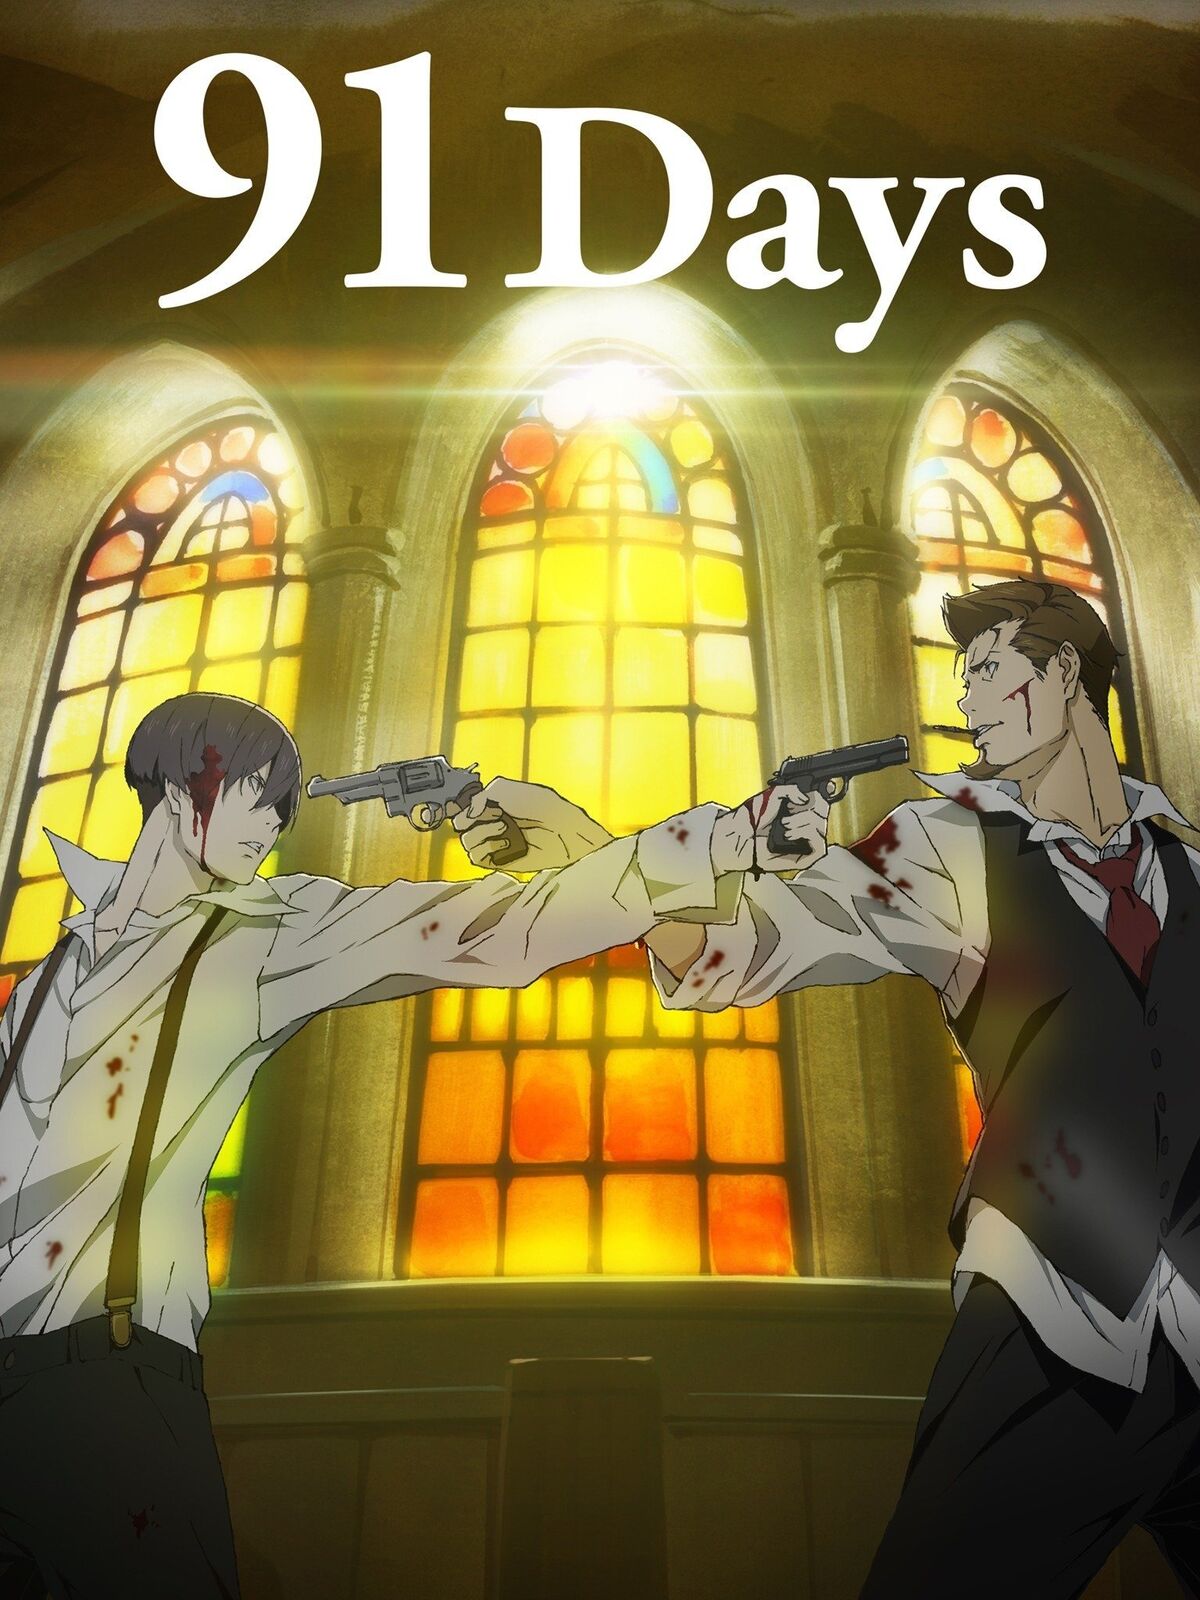 91 Days | Anime Voice-Over Wiki | Fandom